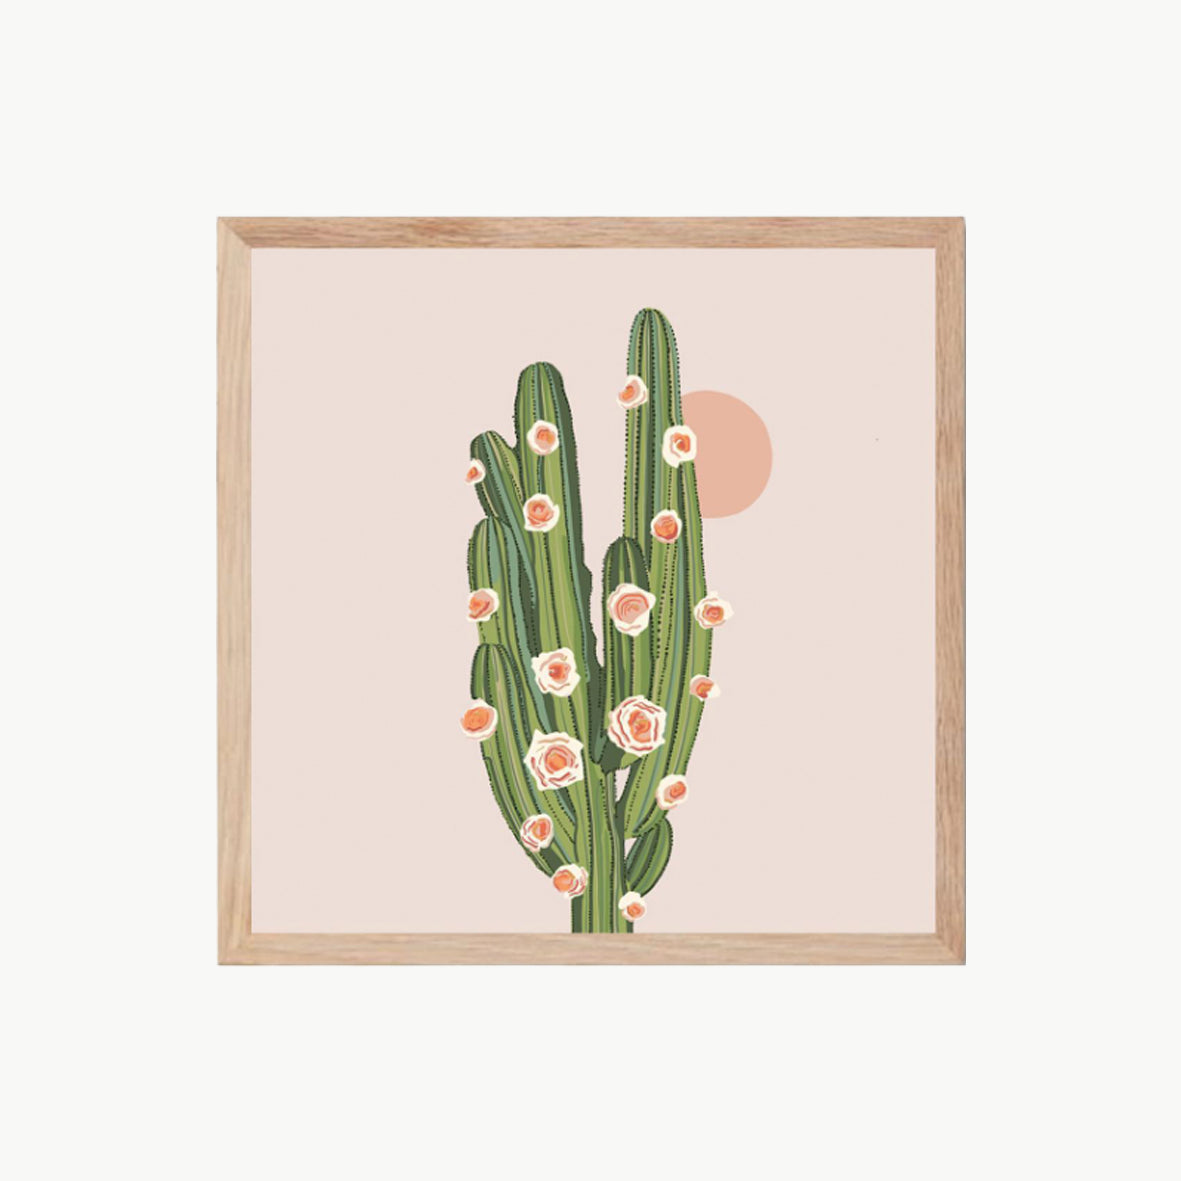 "Cactus at Sunset"